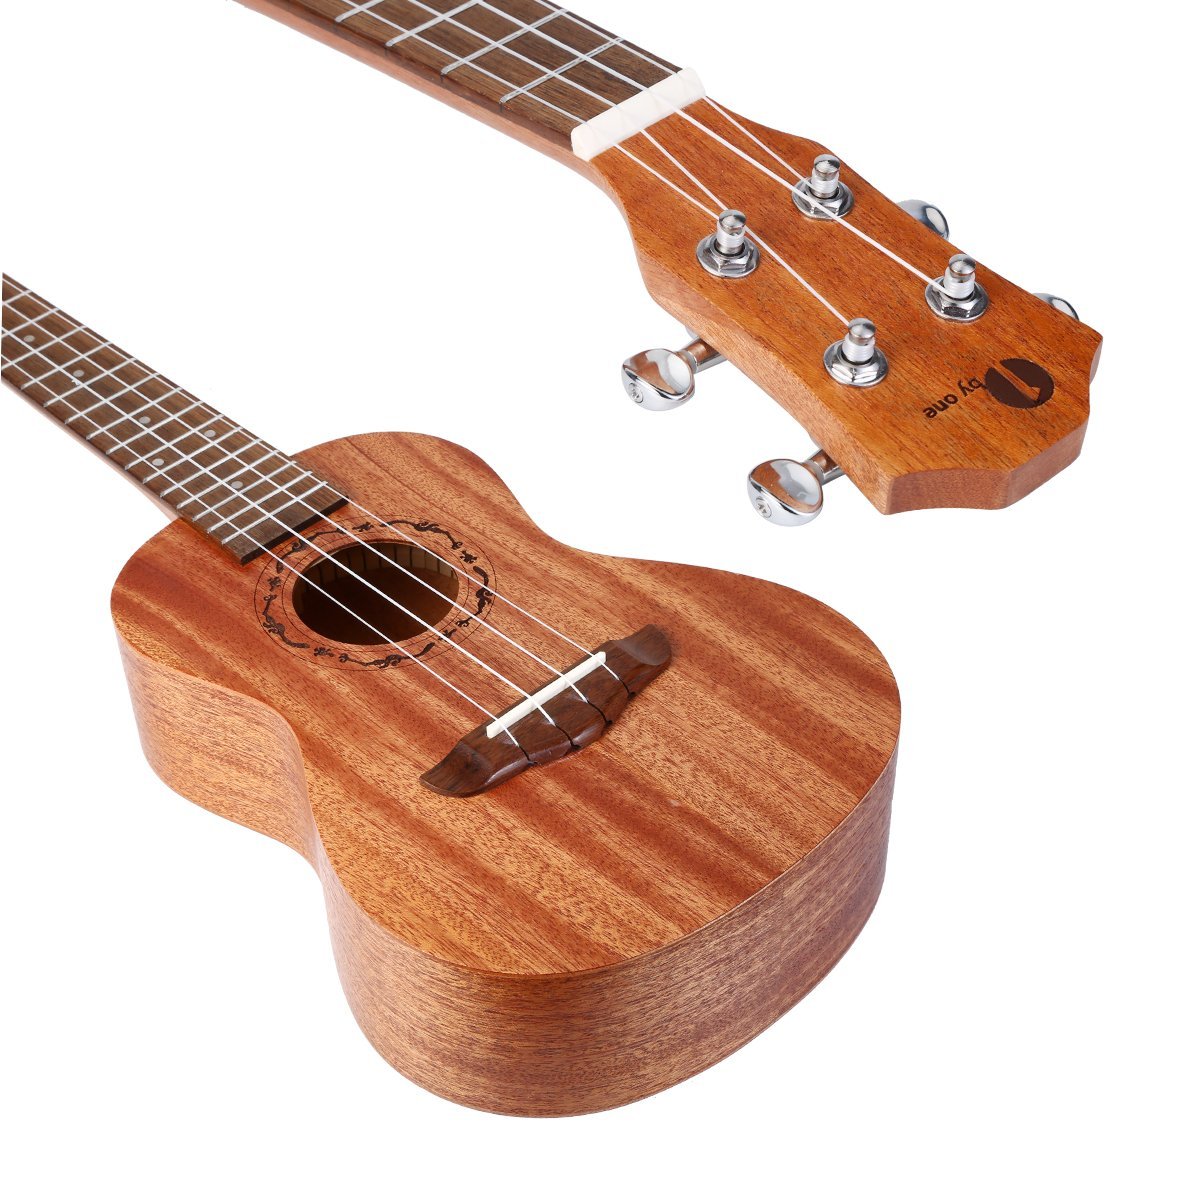 ukulele| guitar| kids| strings